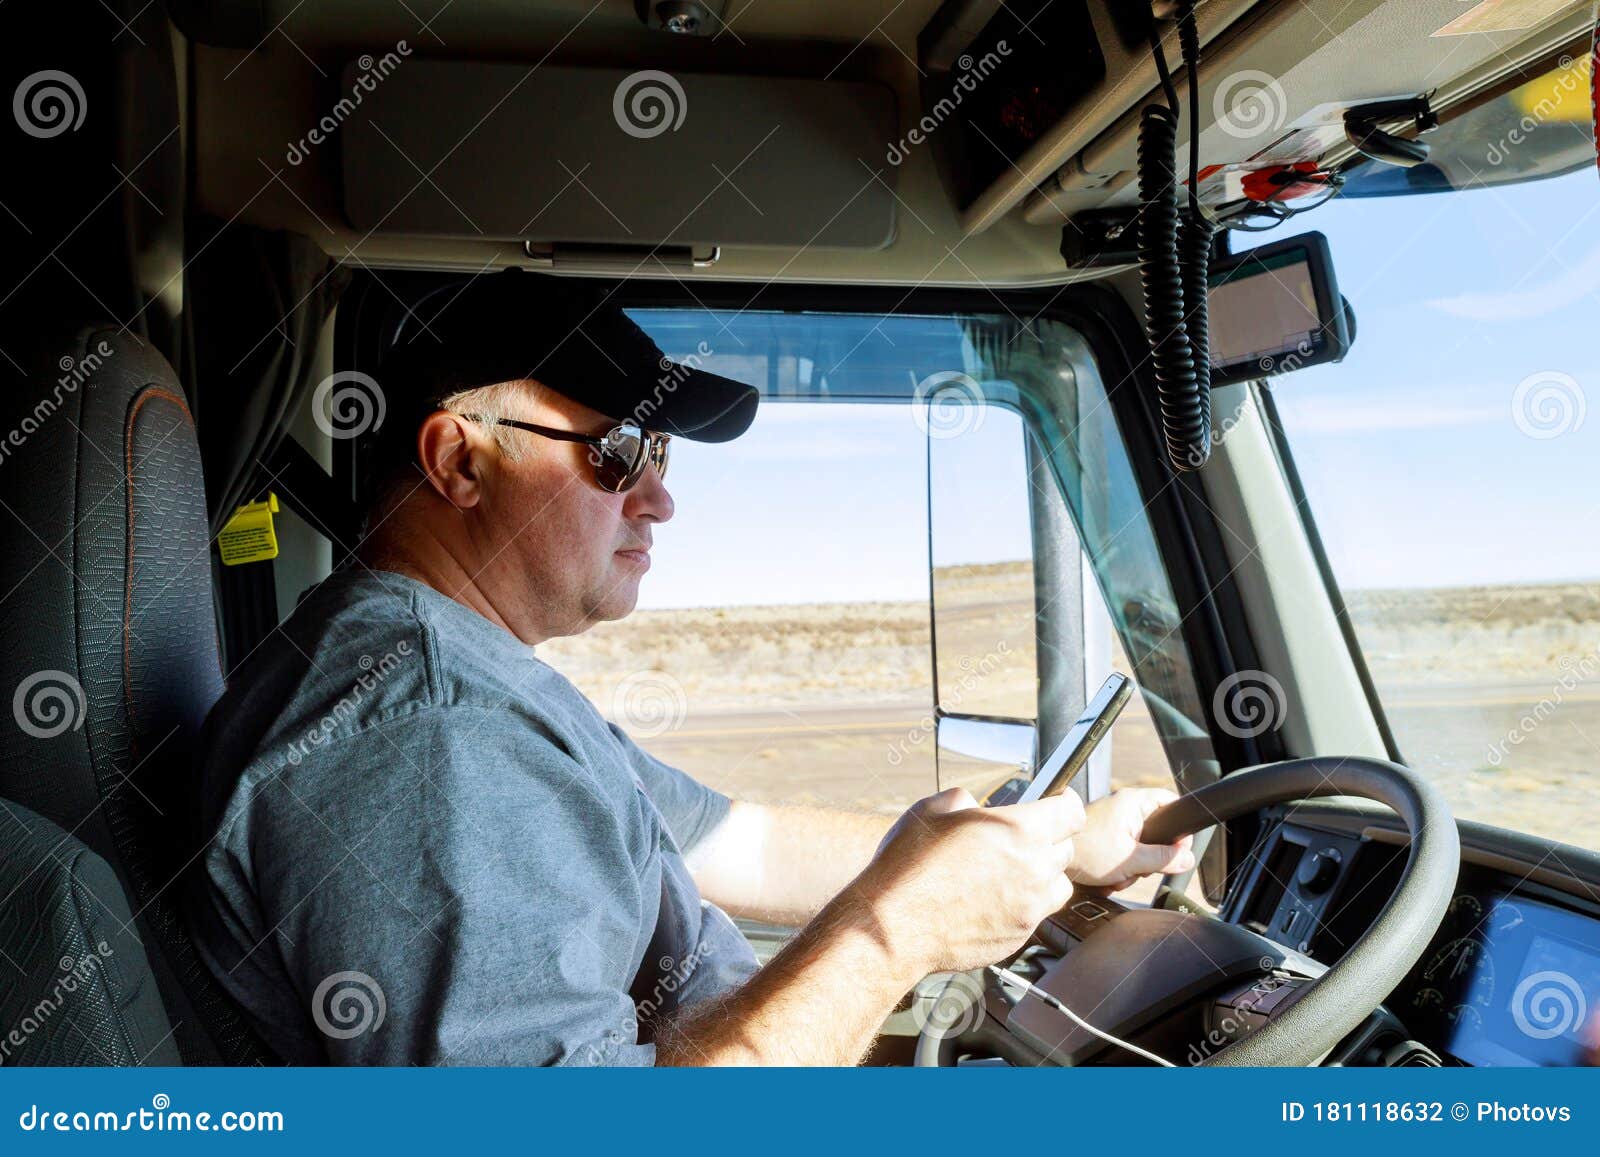 truck drivers big truck driver's in cabin of big modern truck